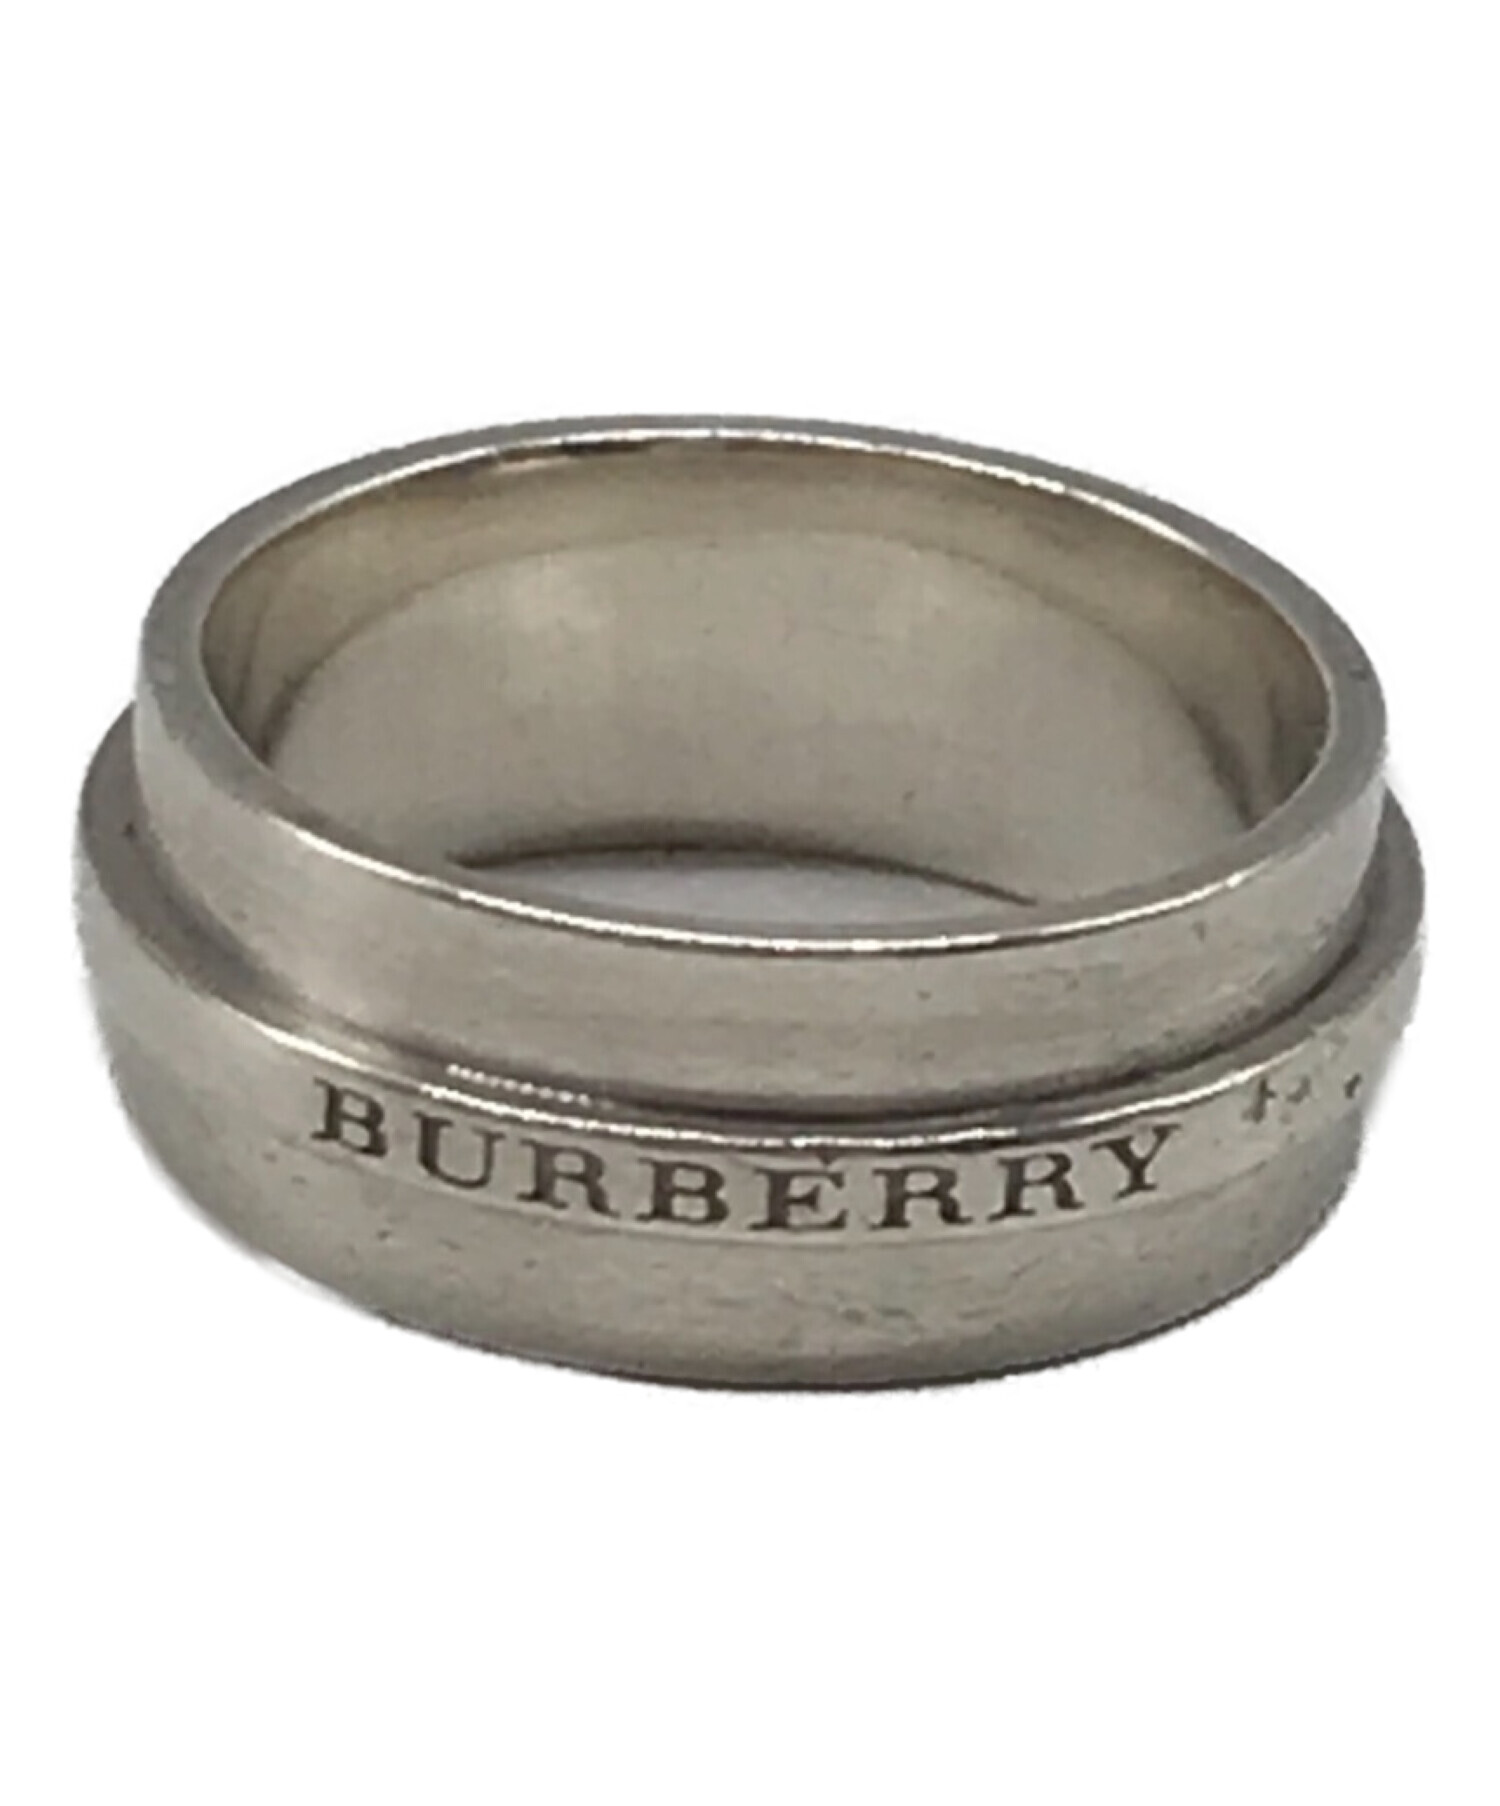 BURBERRY バーバリー指輪 シルバーリング - アクセサリー